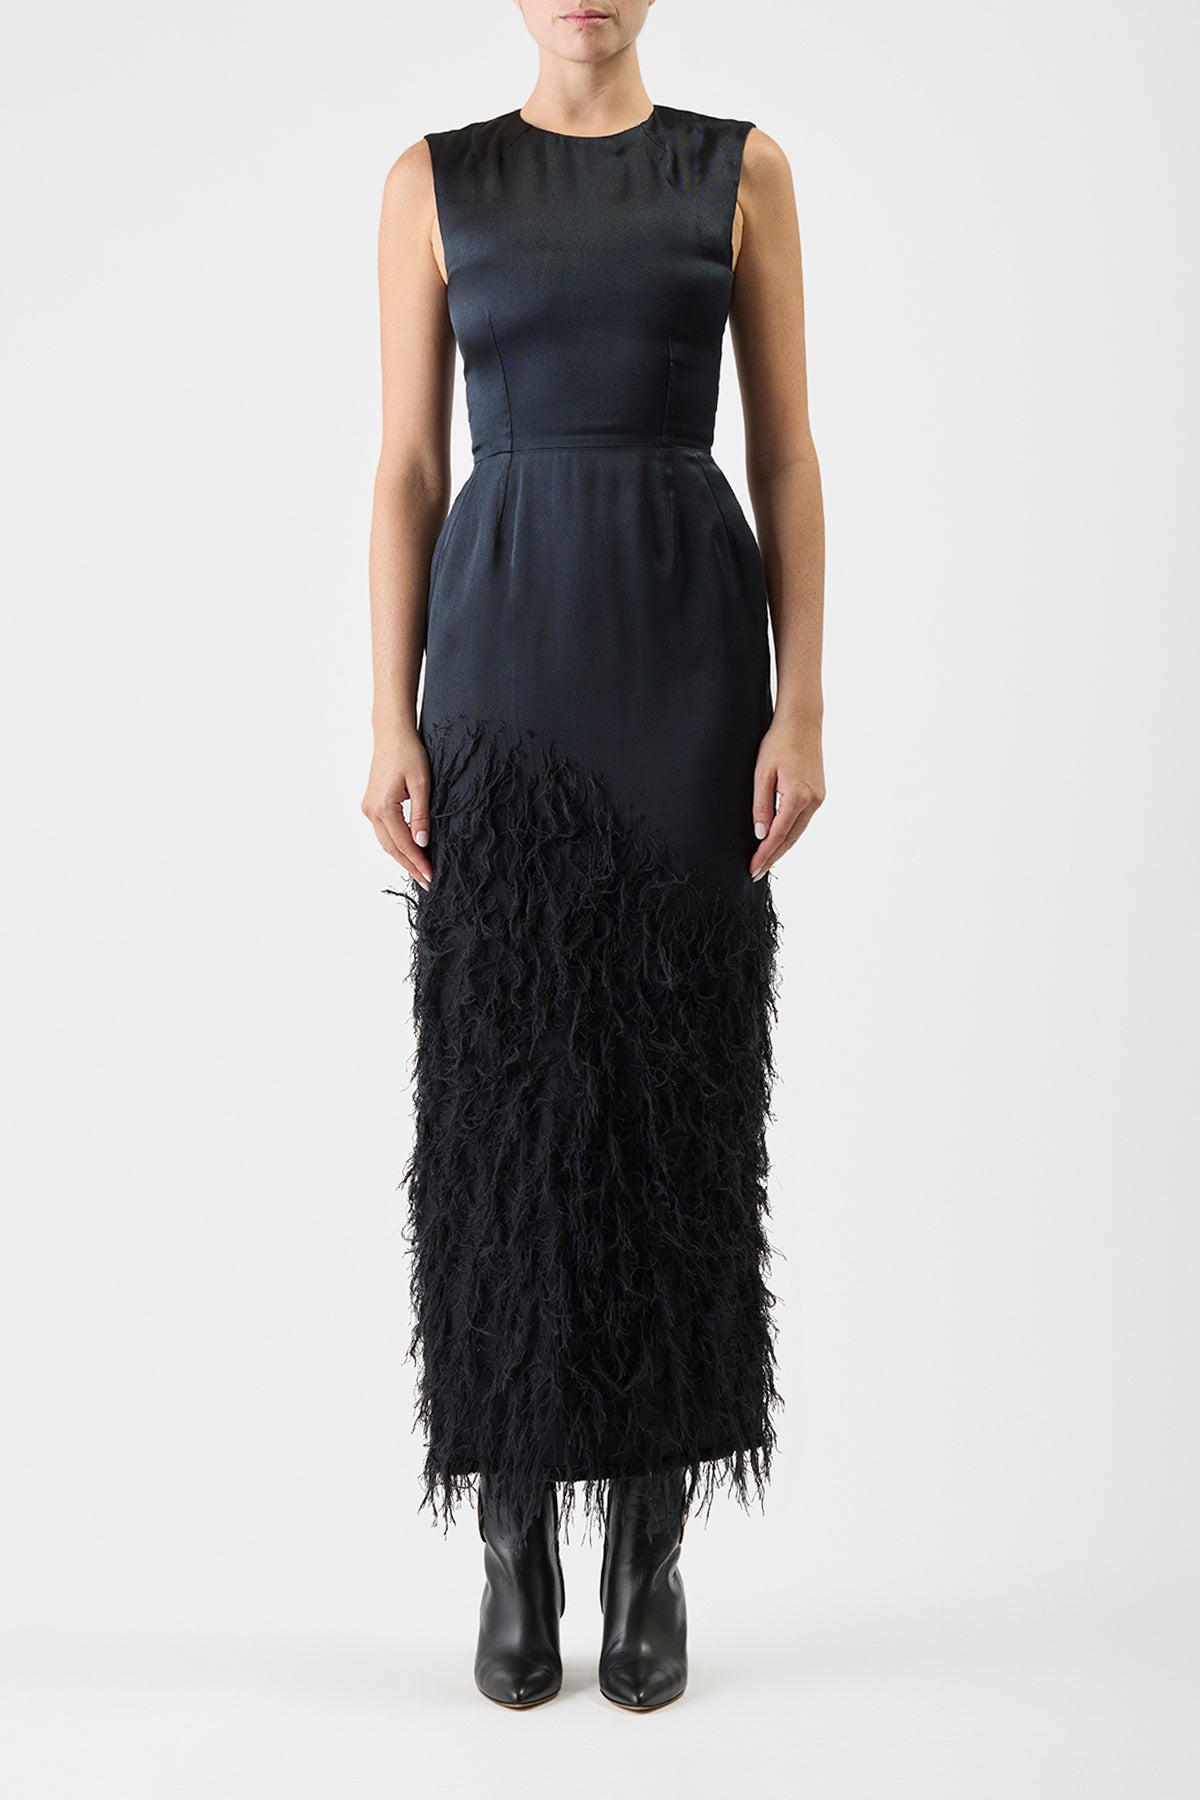 Maslow Feather Dress in Black Silk Satin